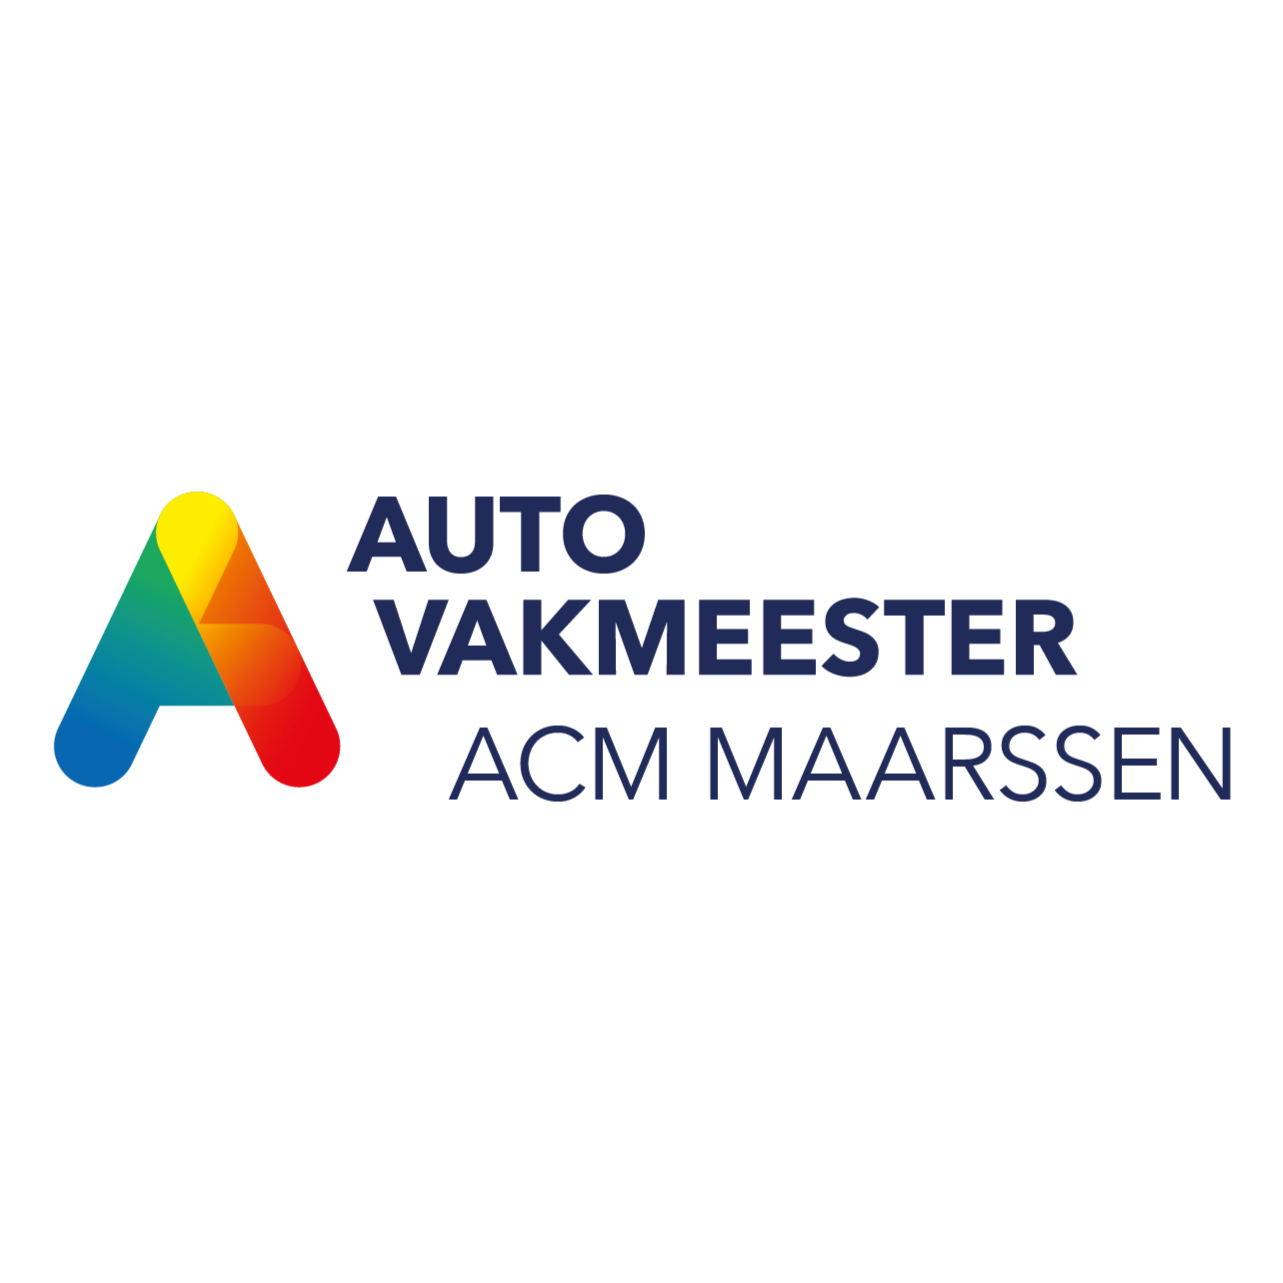 Foto de Autobedrijf Auto Centrum Maarssen ACM | Autovakmeester